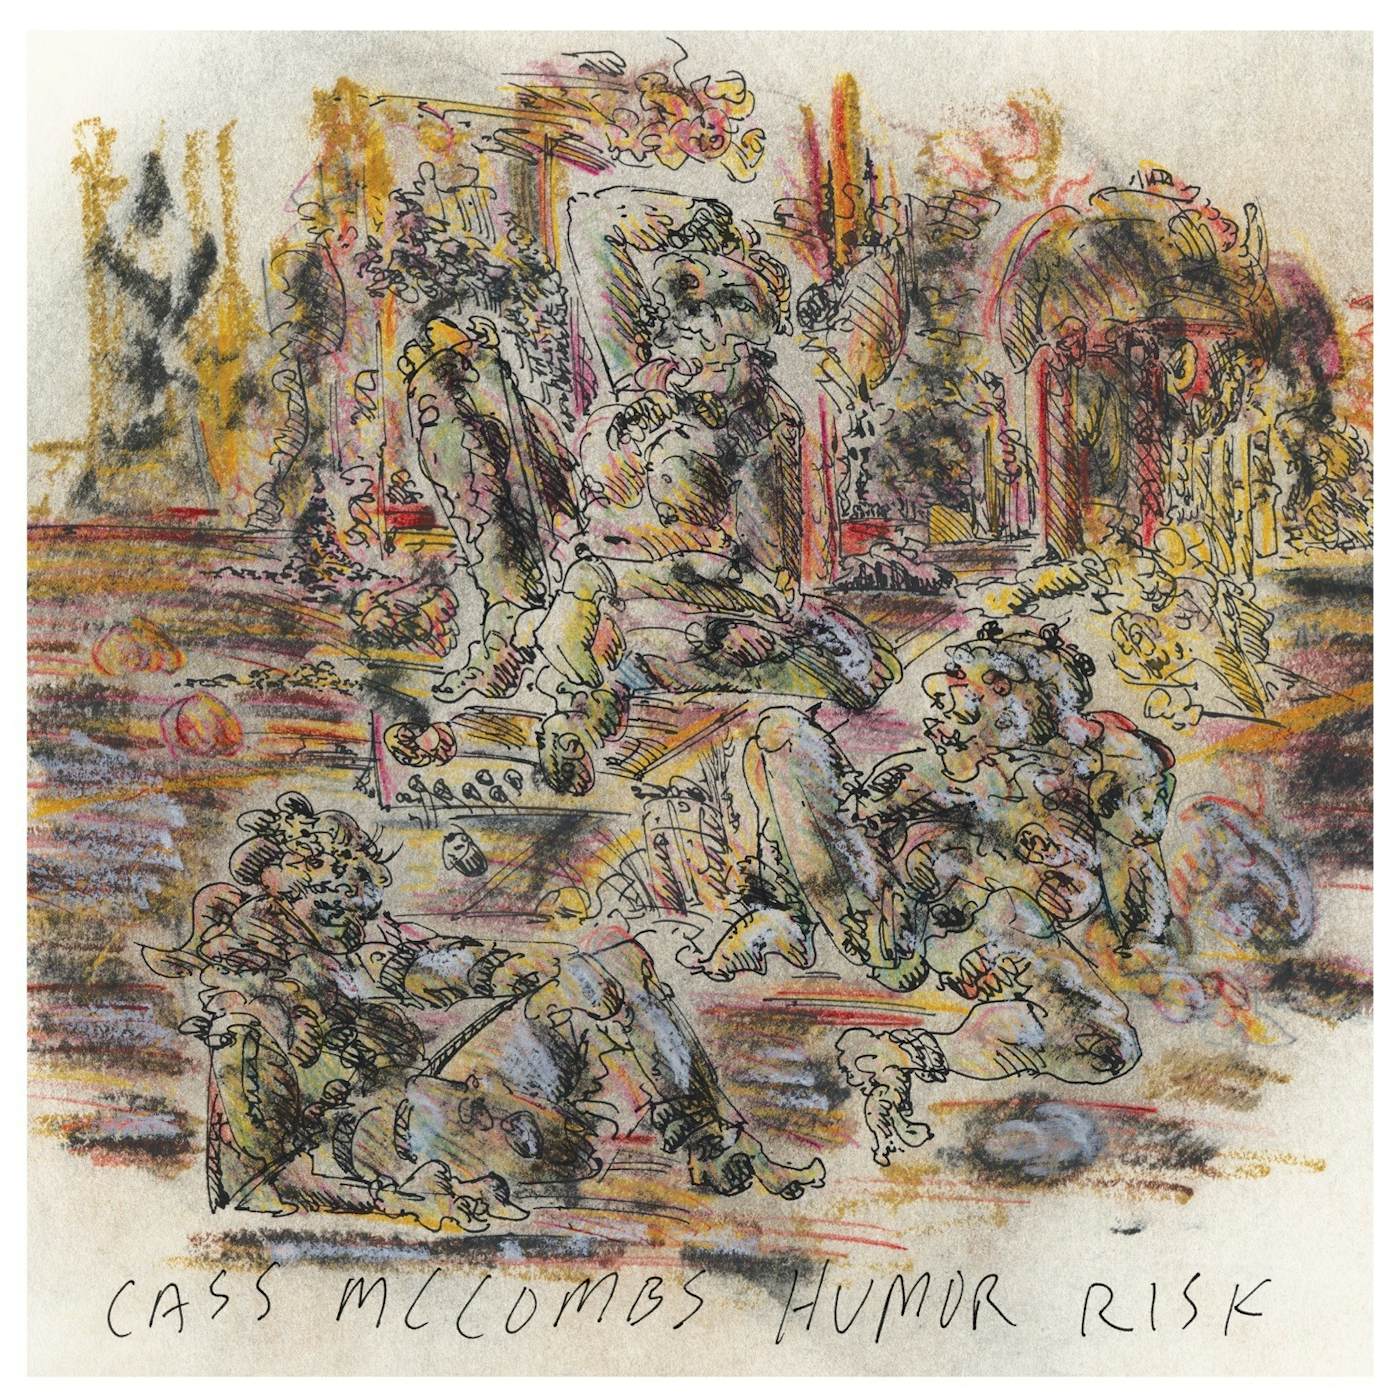 Cass McCombs Humor Risk Vinyl Record